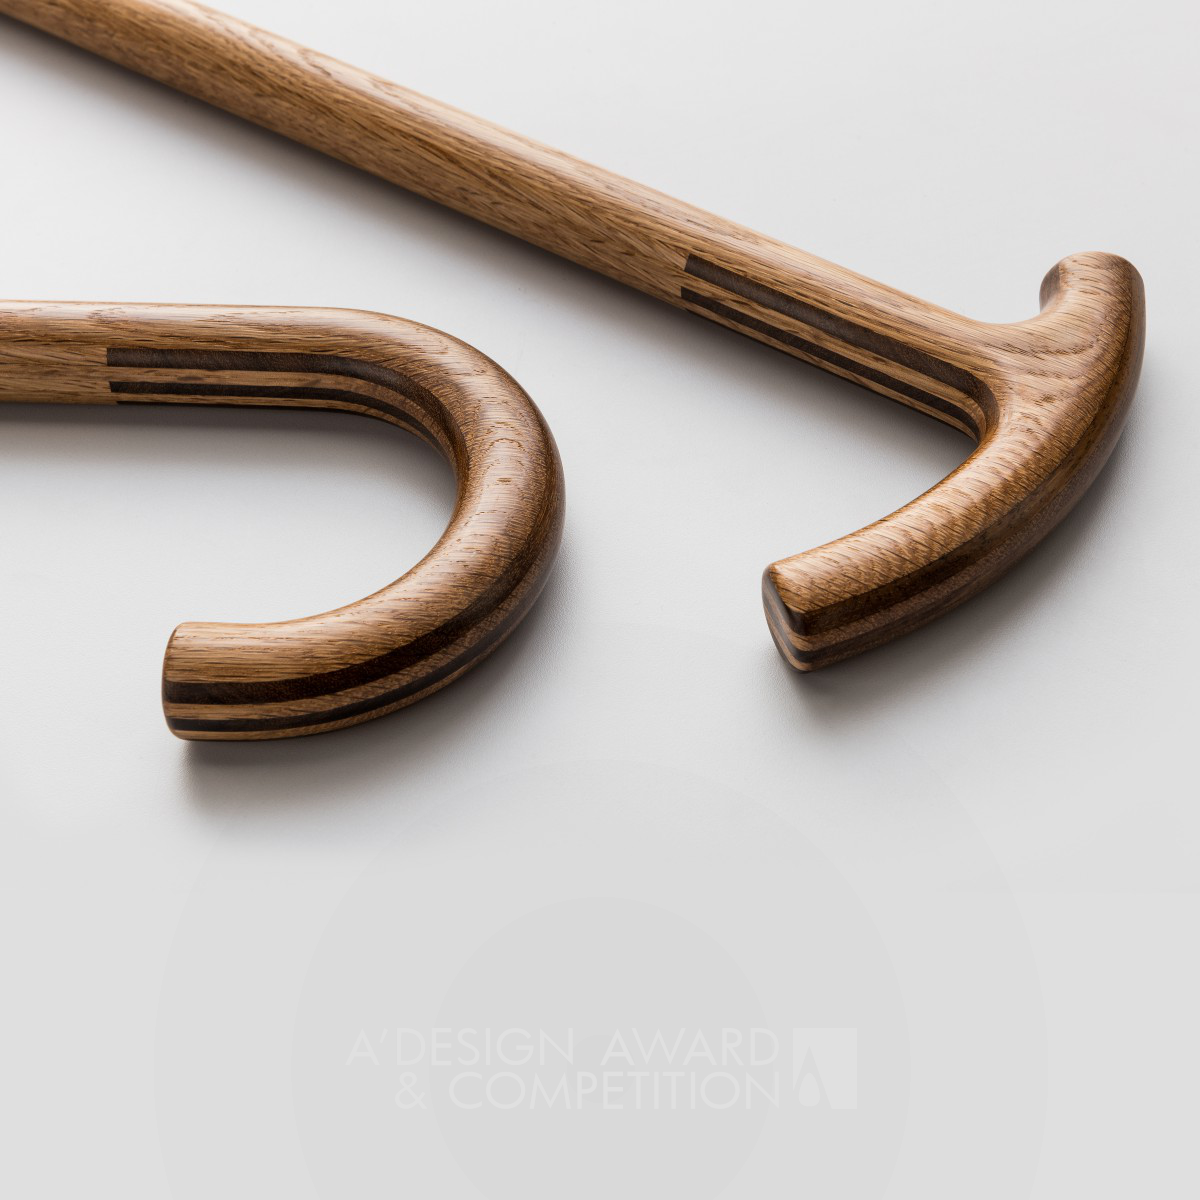 Bengalas Walking Sticks by Alvaro Wolmer Silver Limited Edition and Custom Design Award Winner 2022 